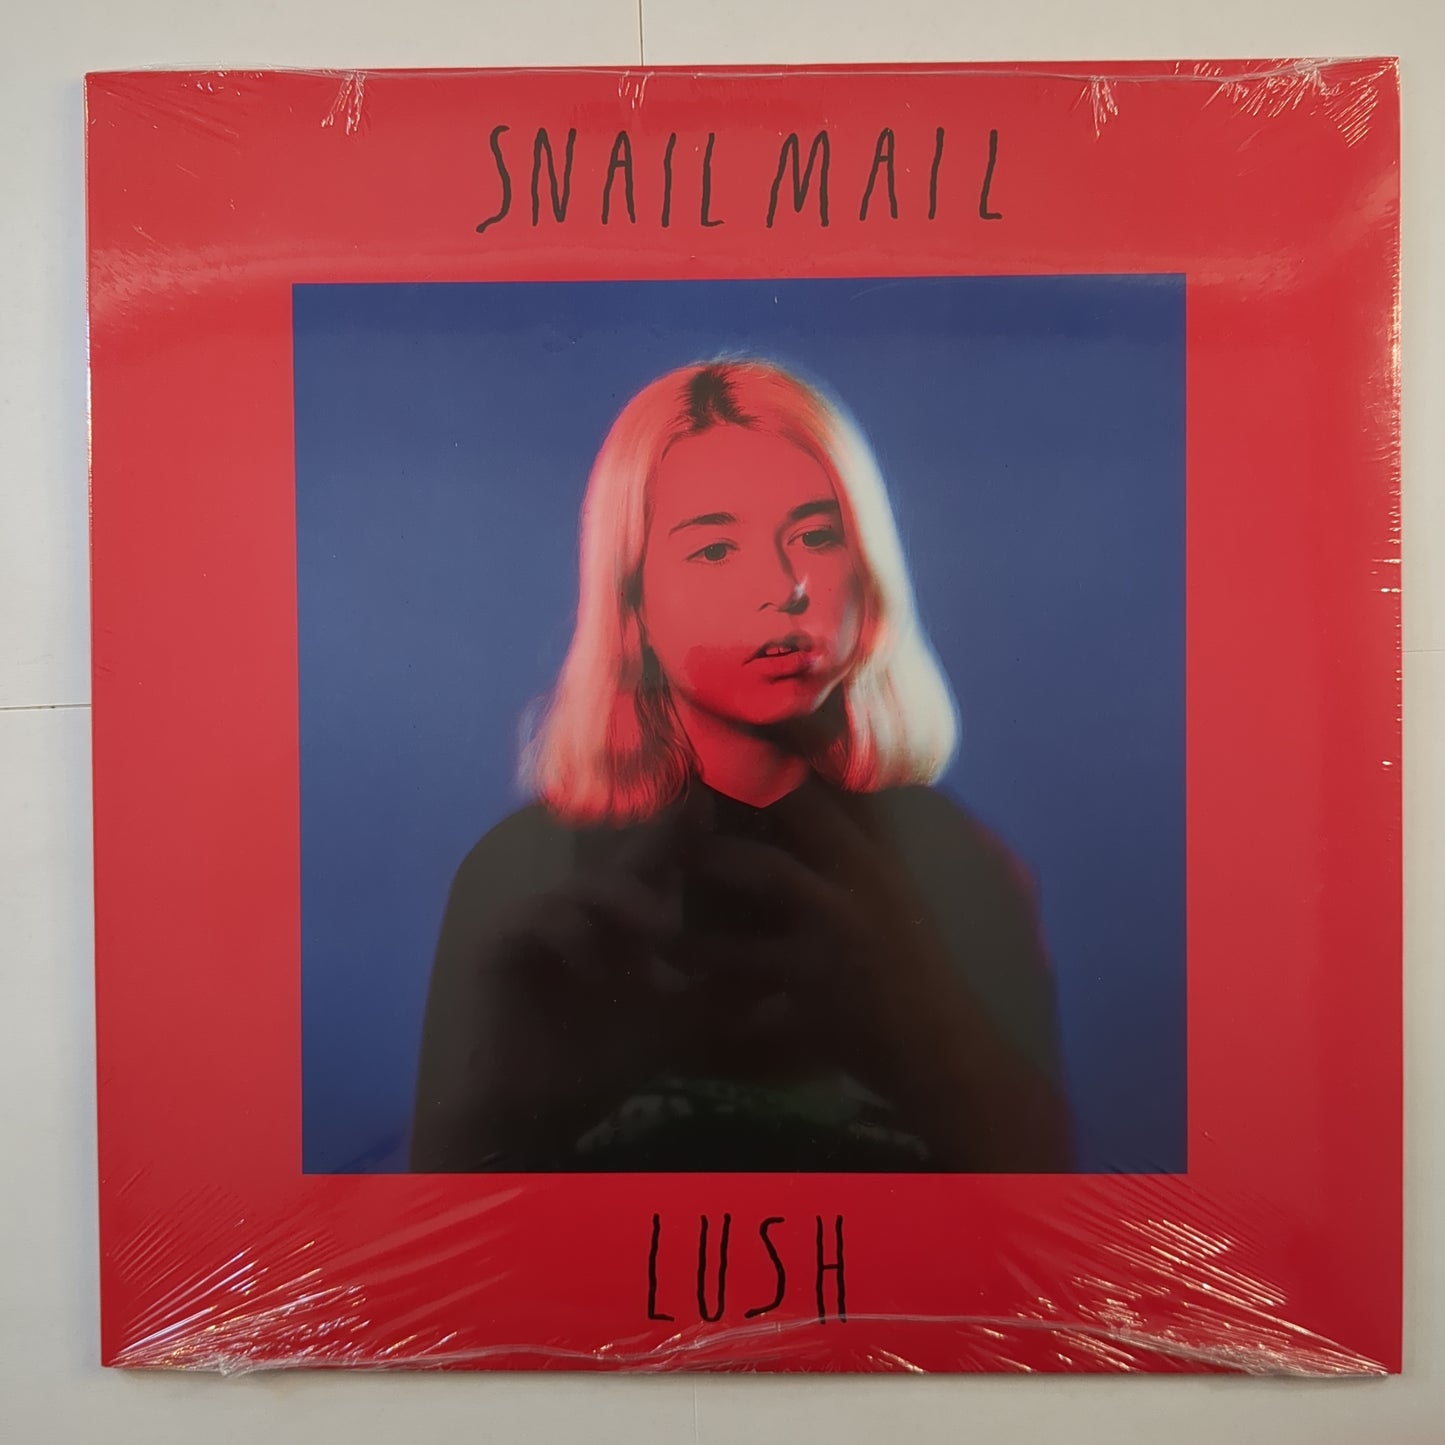 Snail Mail - 'Lush'